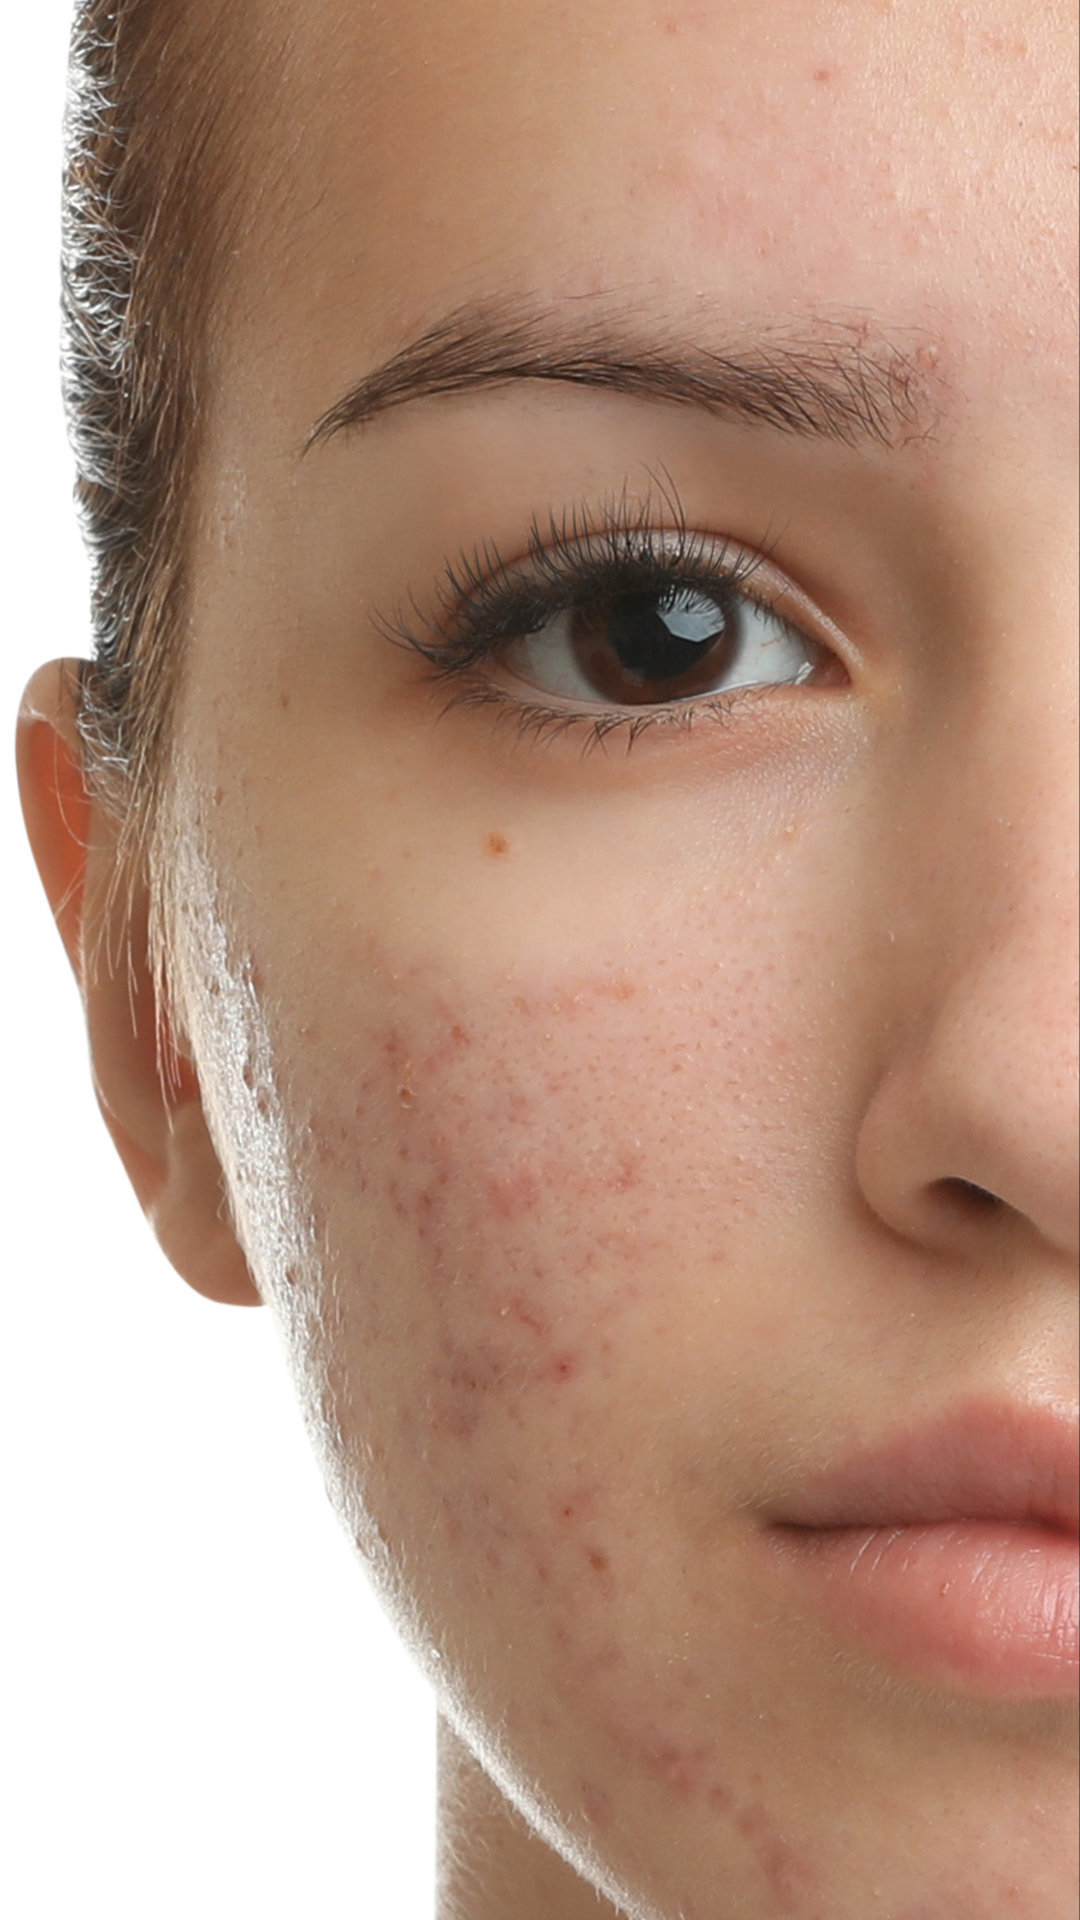 Acne treatments: Acnelan®, Post–acne treatments, PicoSure®, Acne peels, LED light